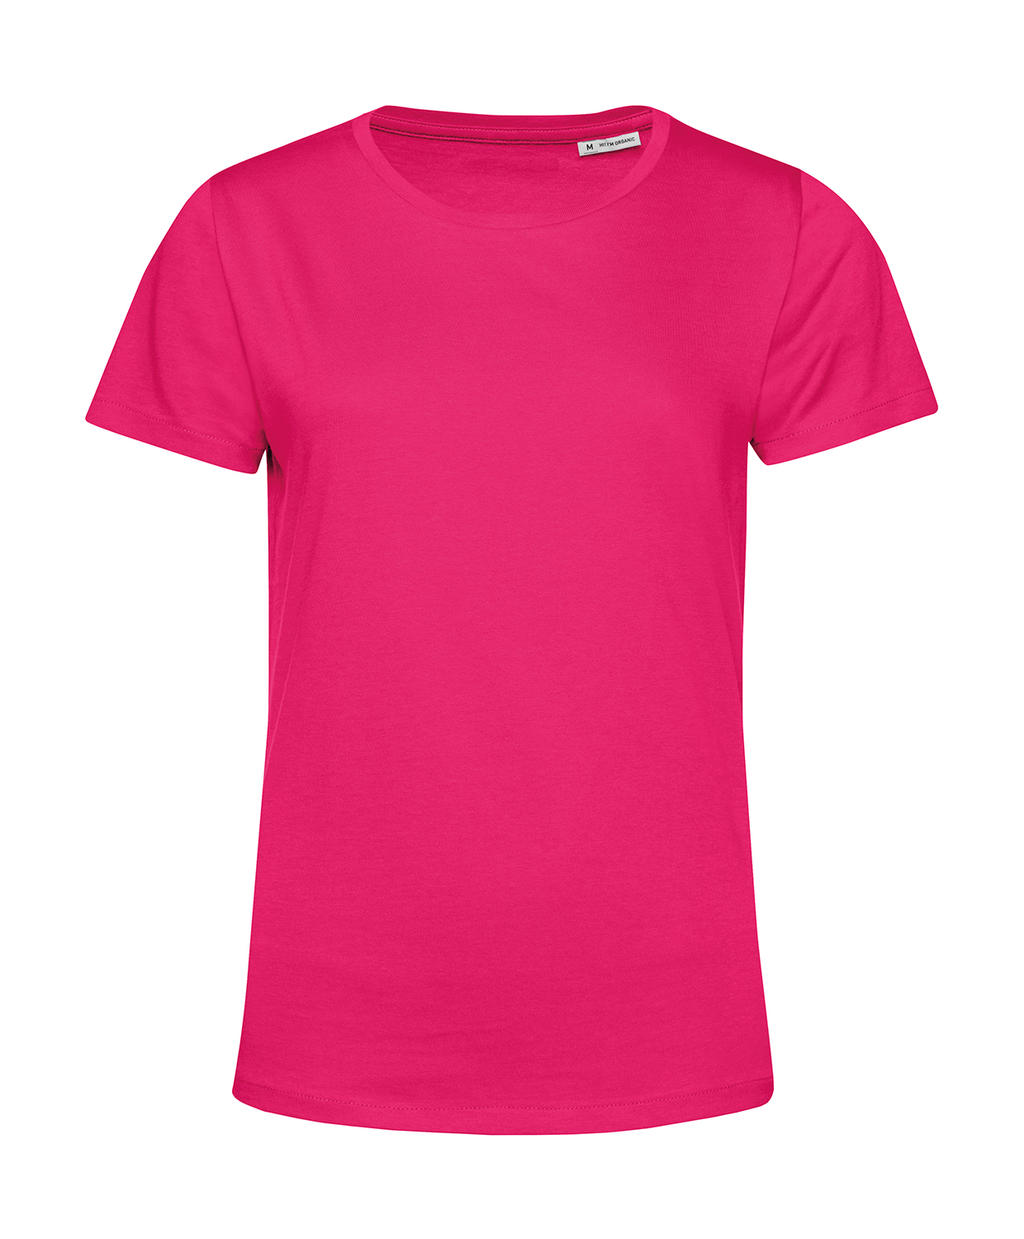 Tričko dámské BC Organic Inspire E150 - tmavě růžové, XS